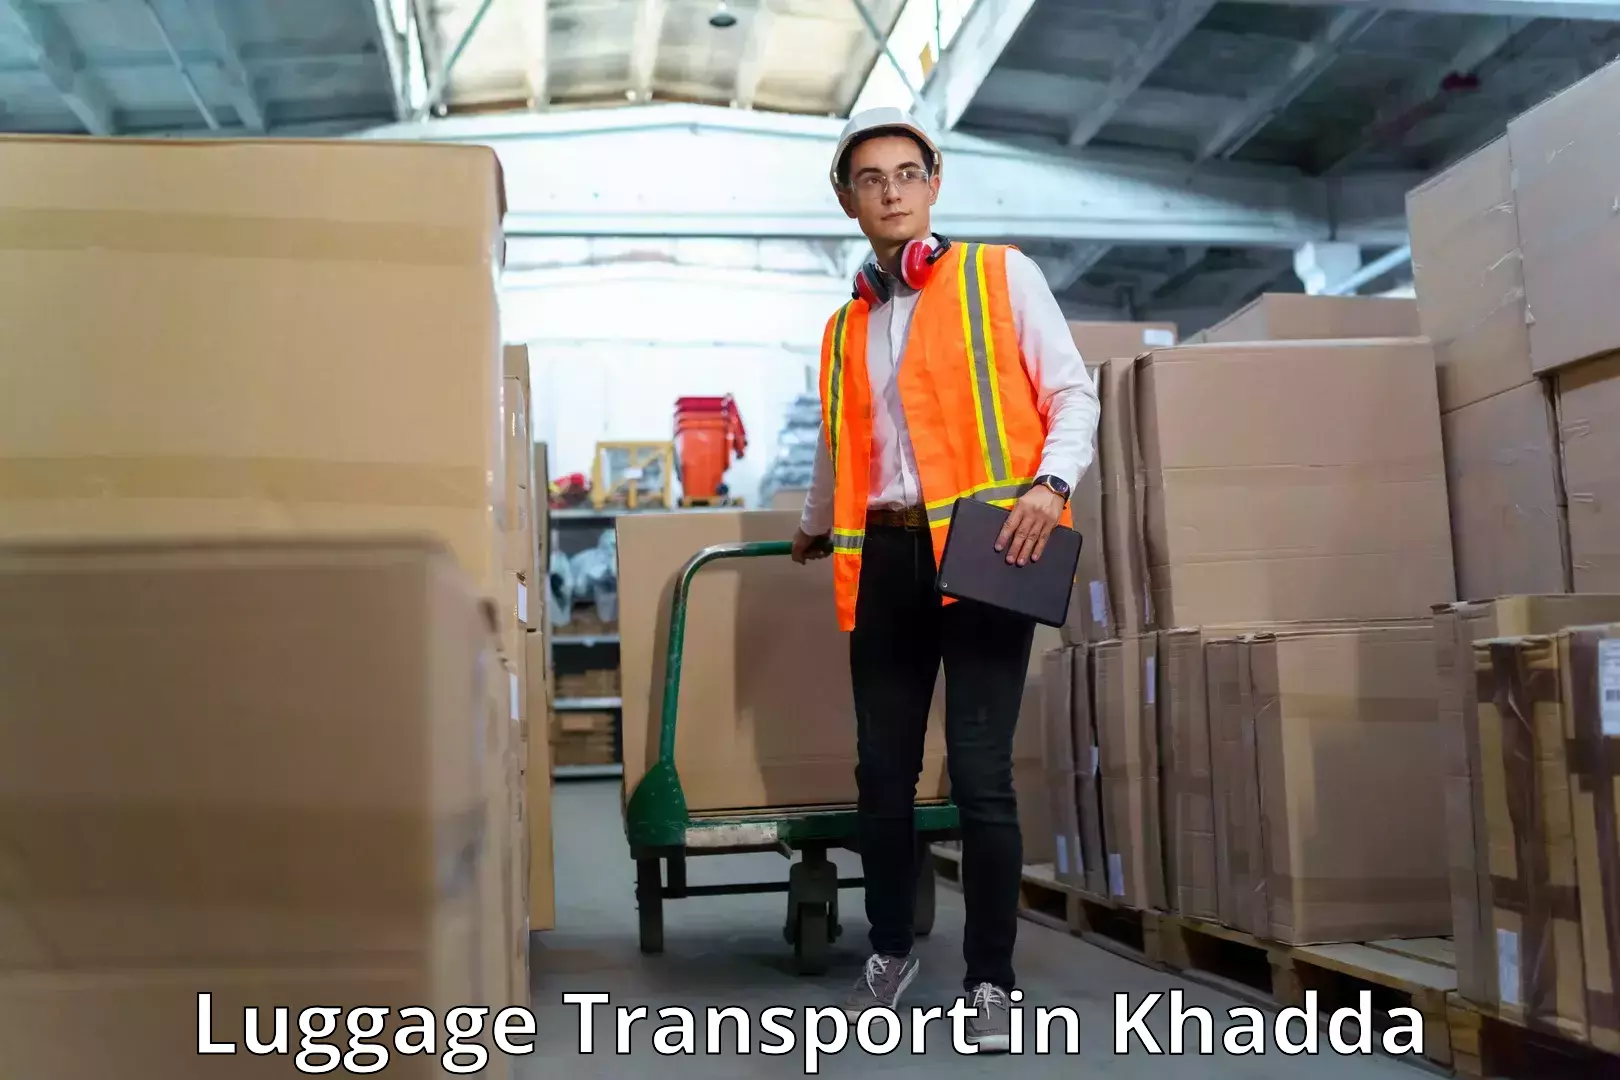 Luggage shipping consultation in Khadda